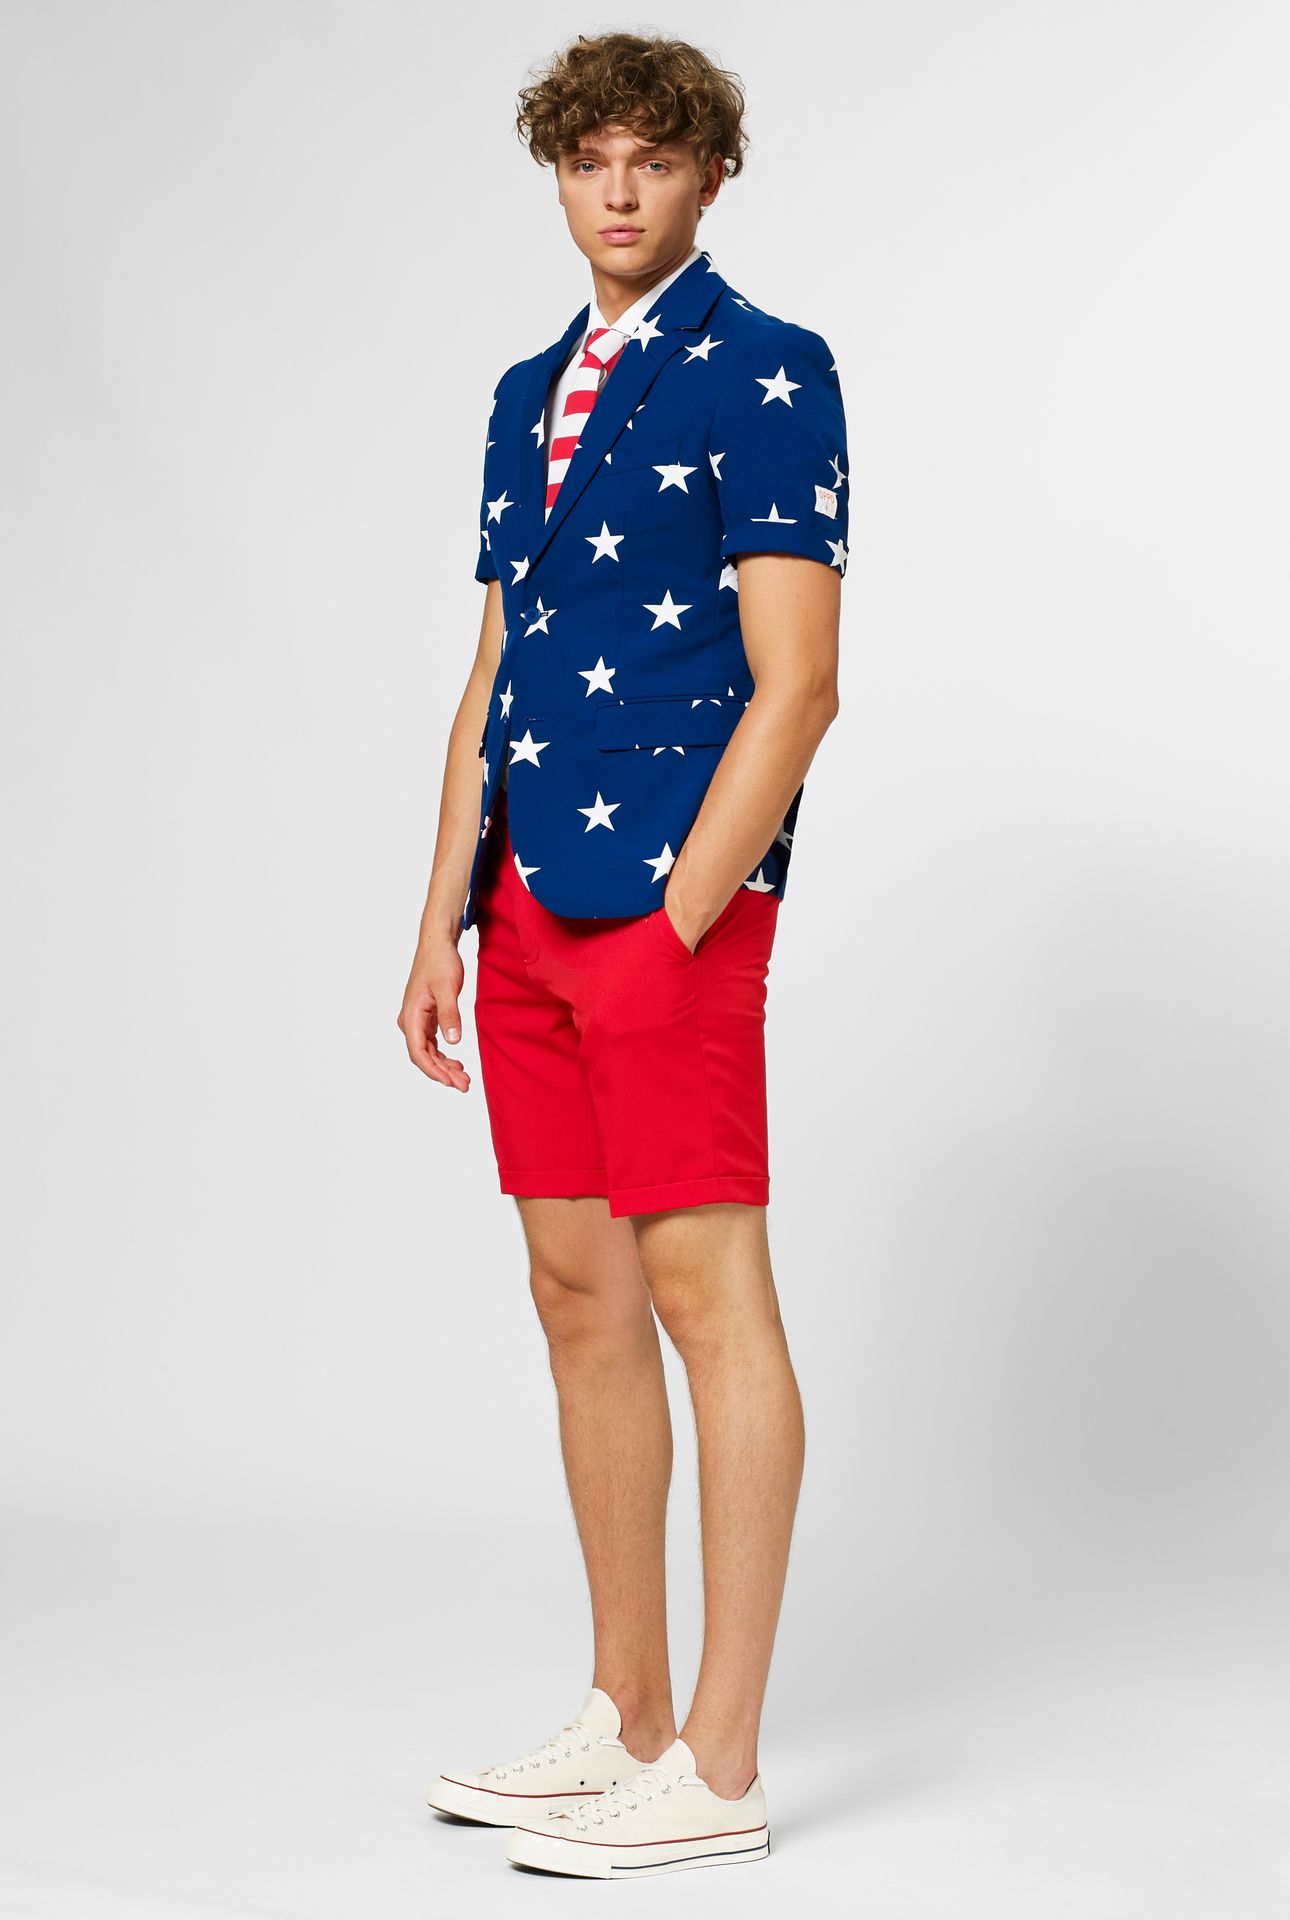 United States of America Opposuits zomer kostuum